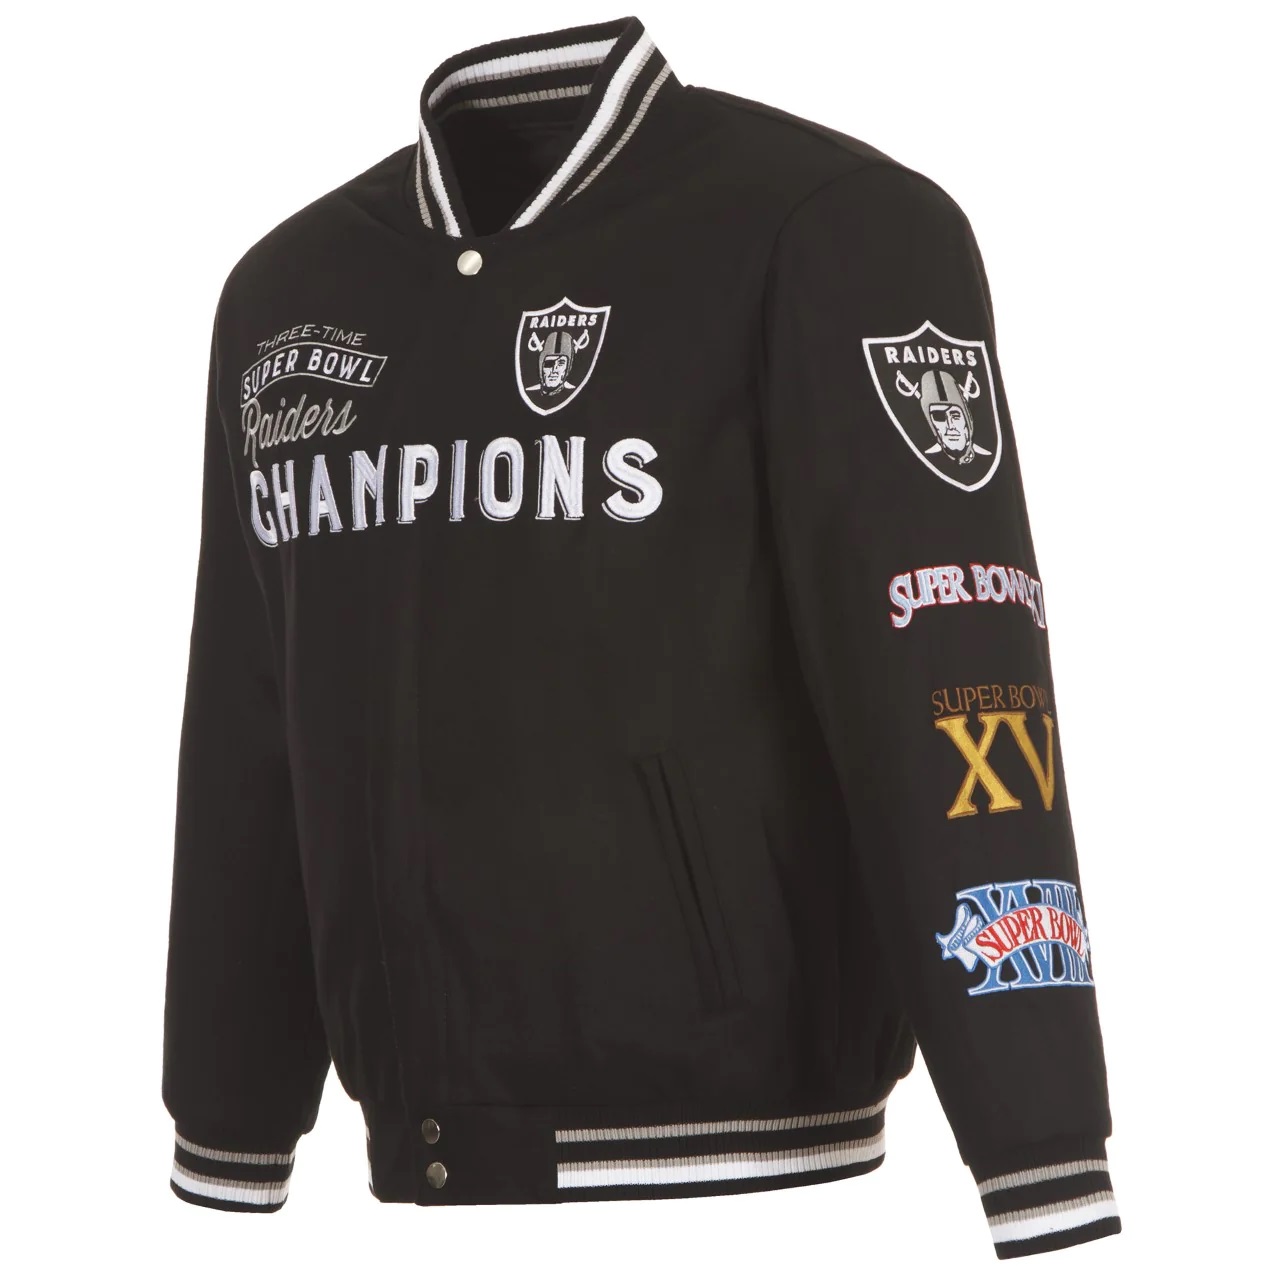 Las Vegas Raiders Super Bowl Wool Championship Jacket